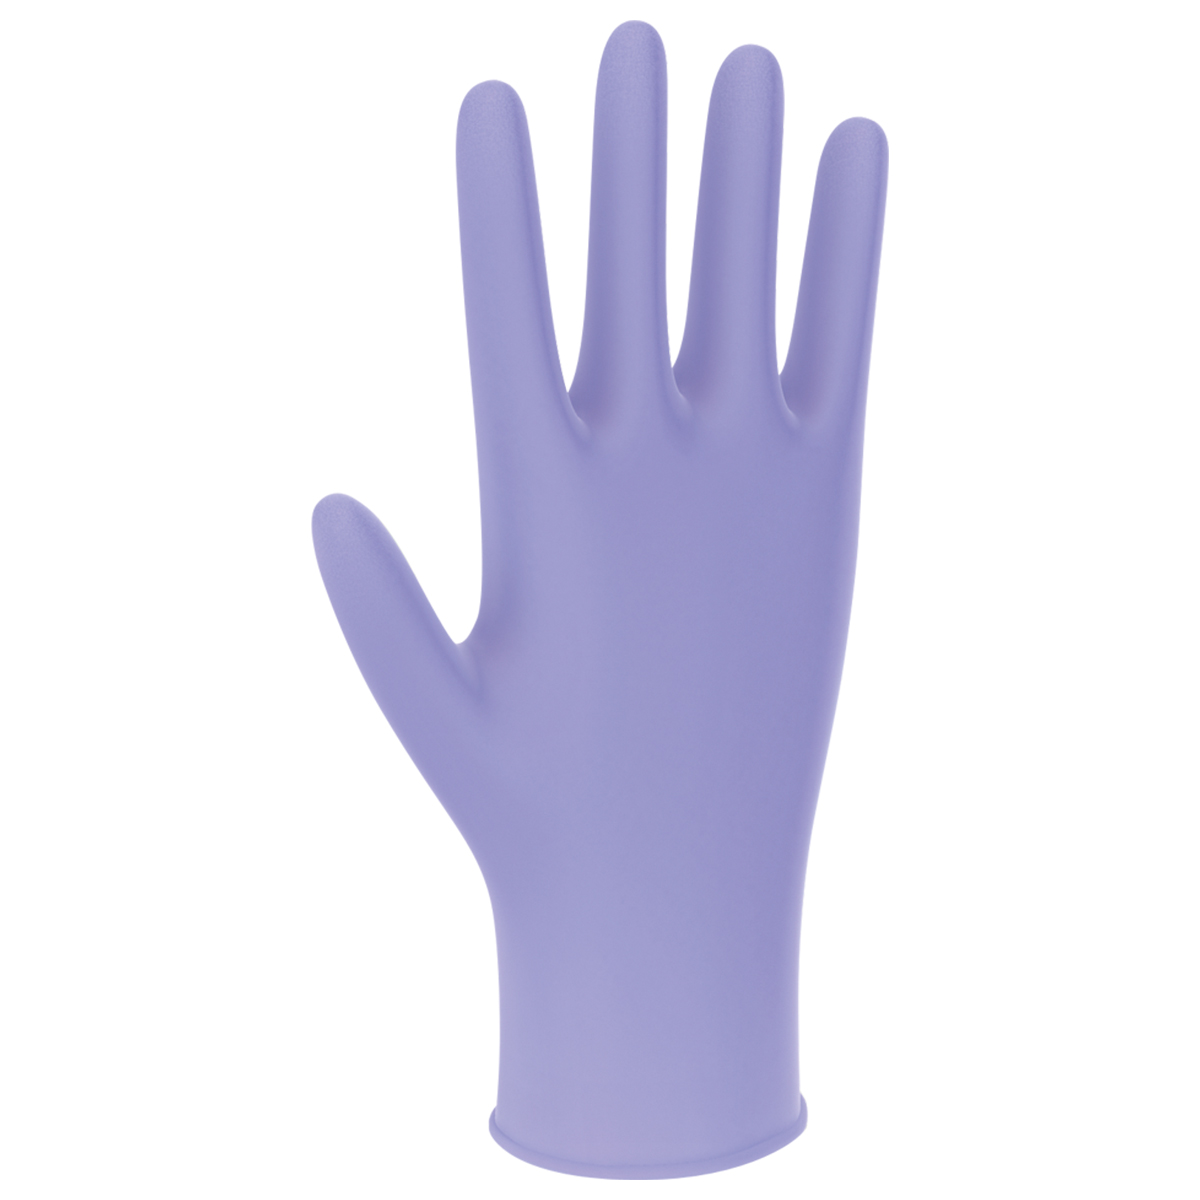 Einmal-Handschuhe, Nitril, Gr. S / 6 - 7, violett, latexfrei, puderfrei, unsteril, 100 Stk